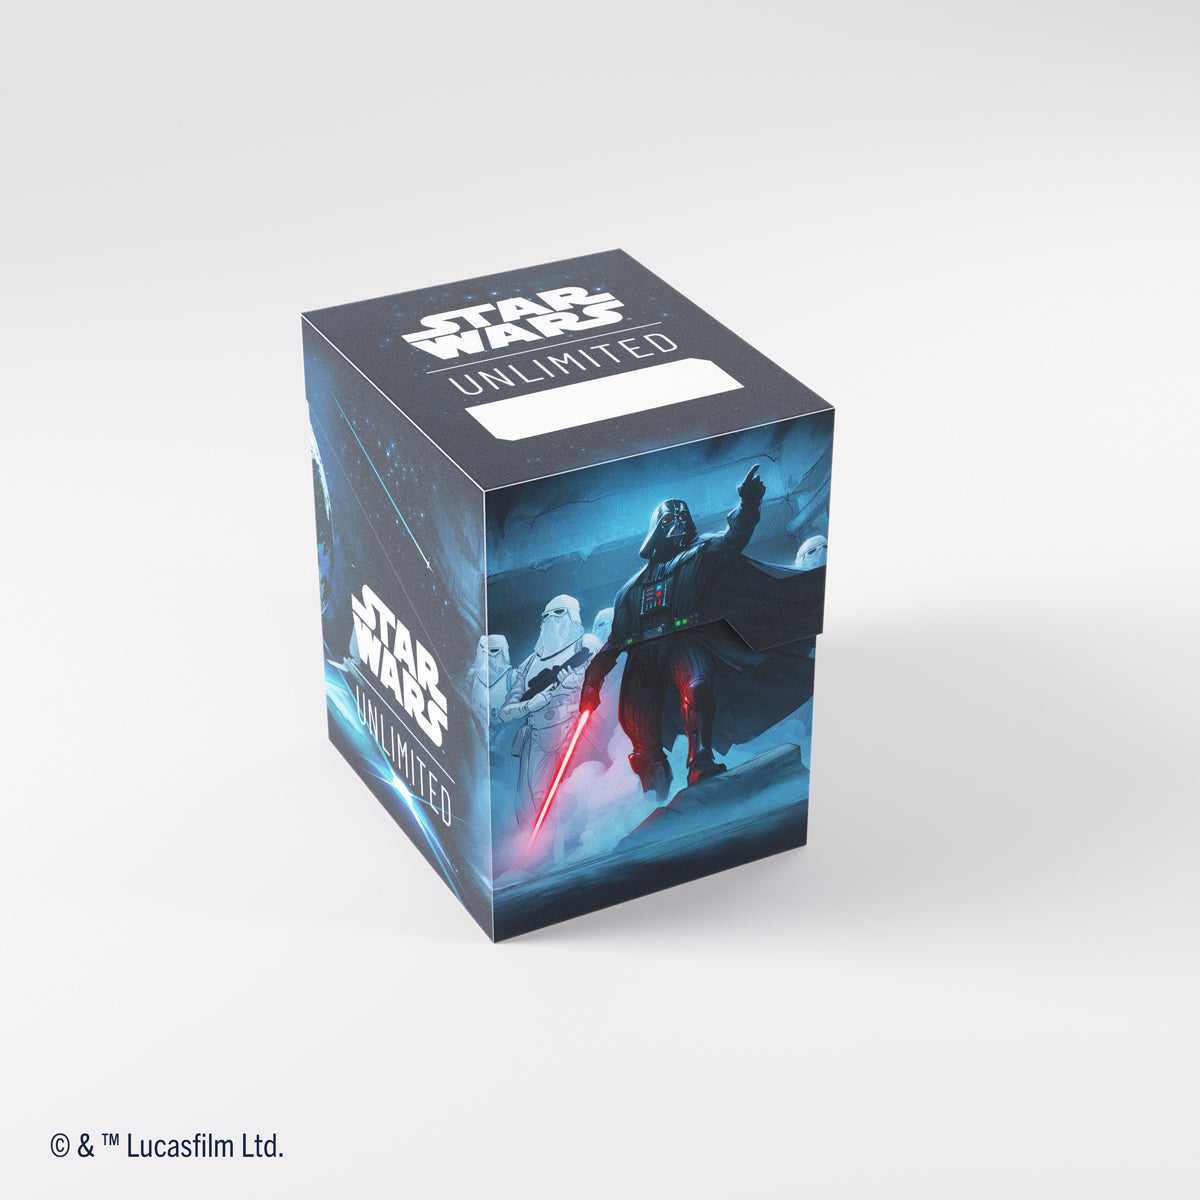 Gamegenic Star Wars: Unlimited Soft Crate Deck Box - Darth Vader